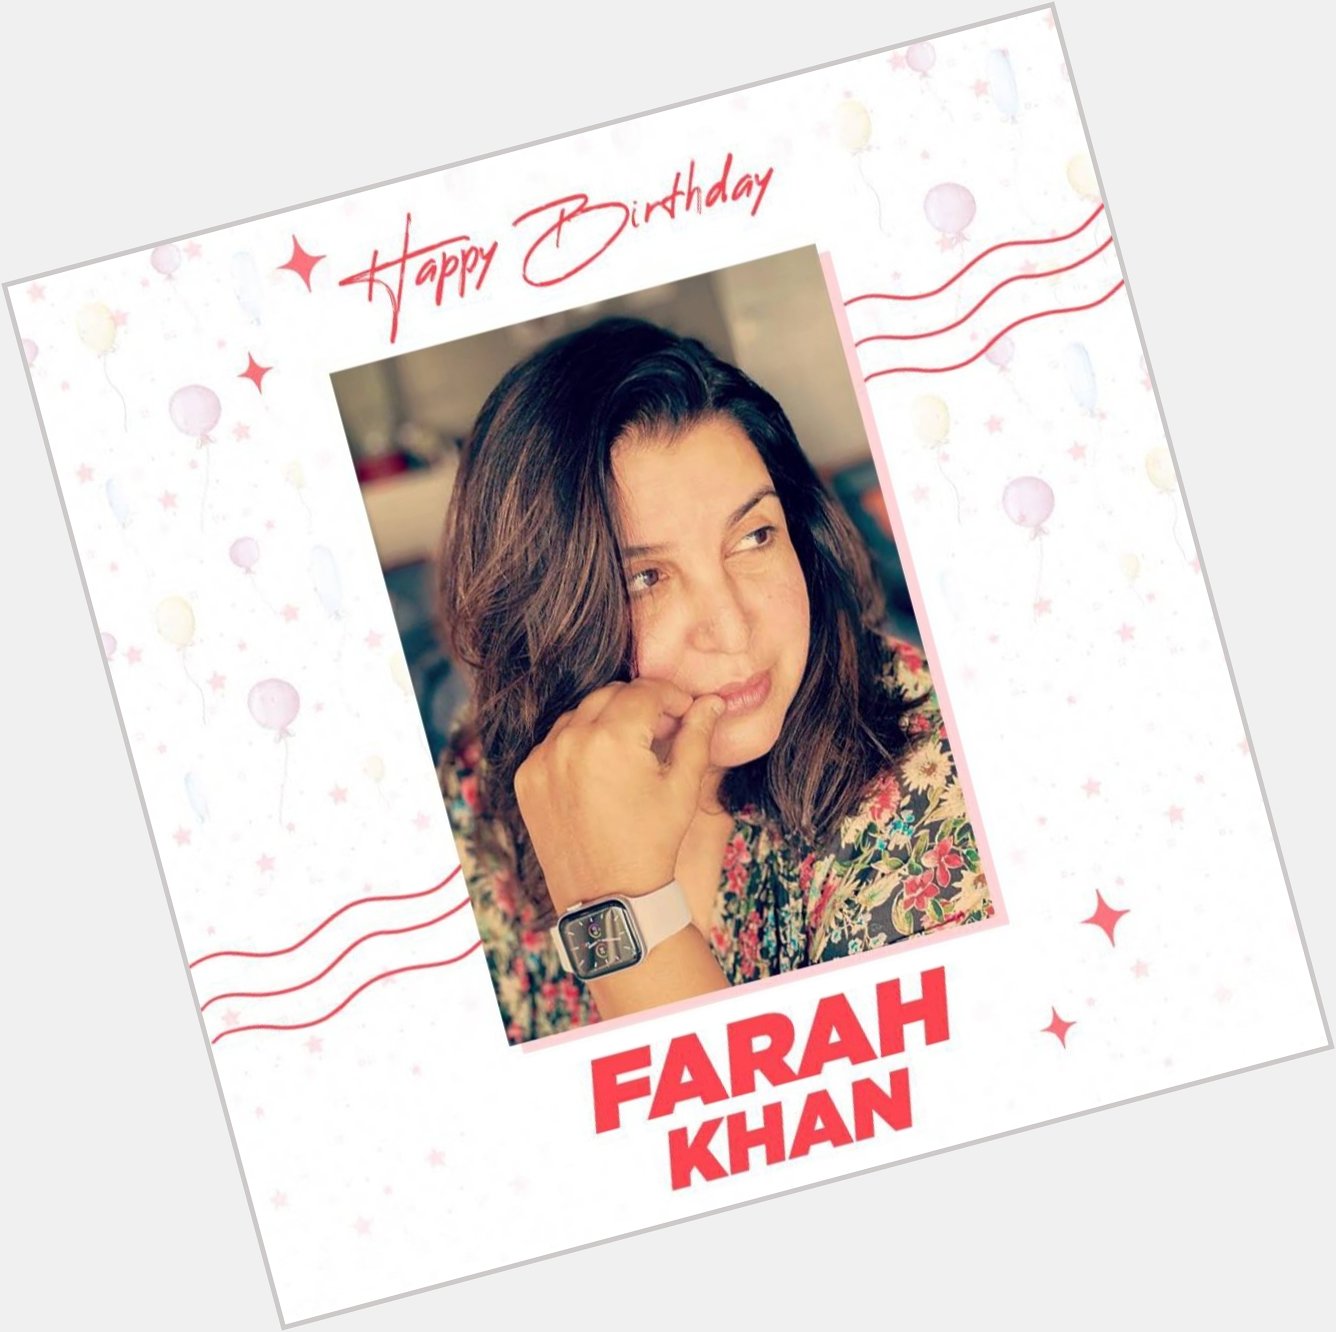 She\s got everyone dancing Wishing the ace choreographer, Farah Khan, a very Happy Birthday  